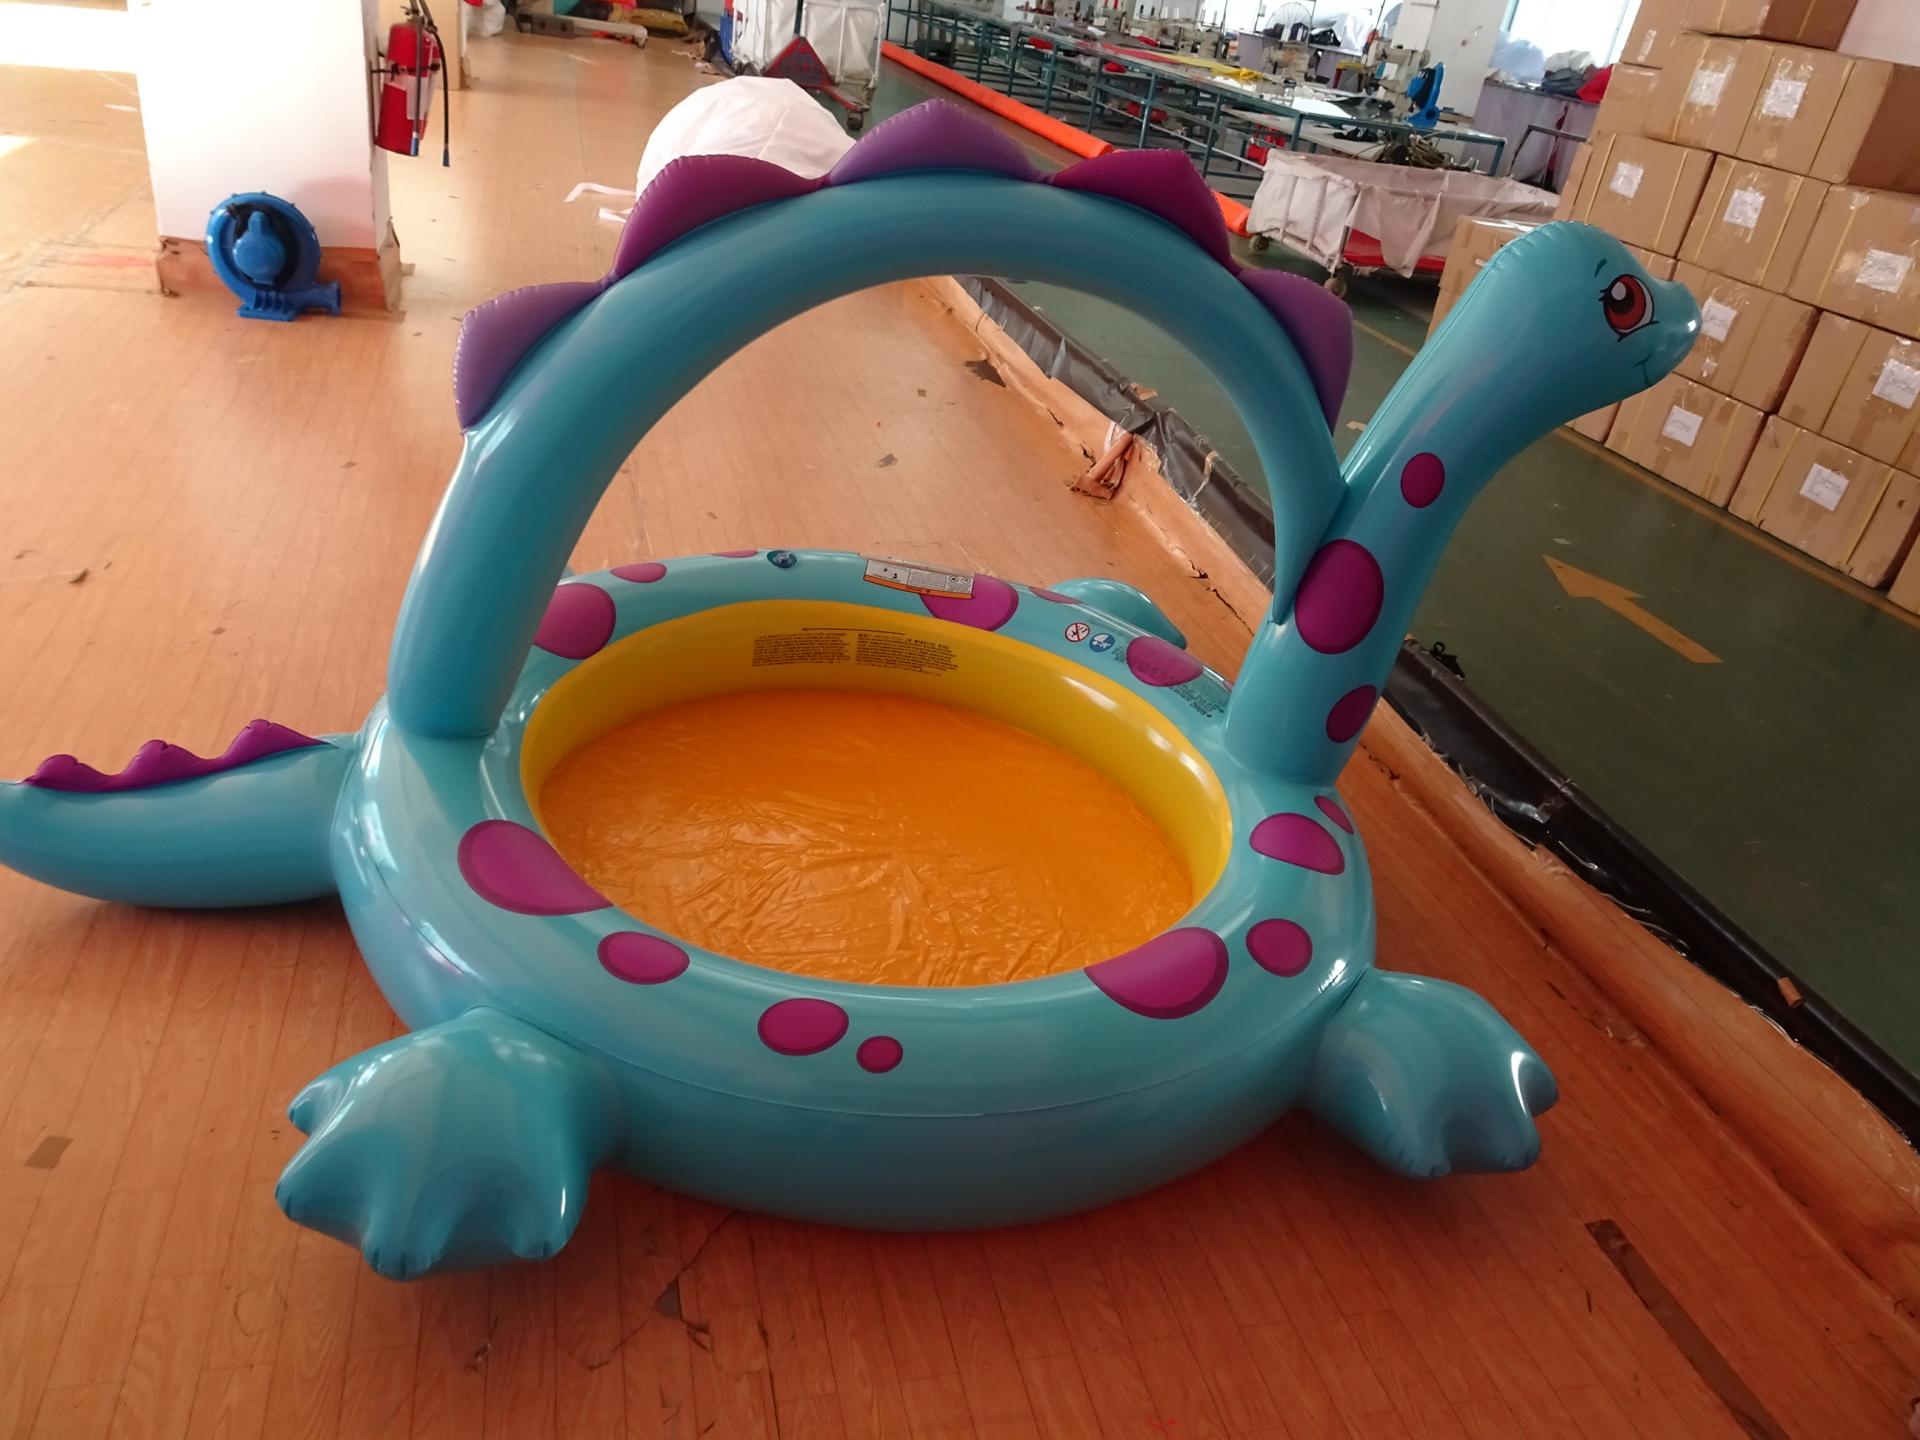 Customised Inflatable Kiddie Swimming Dinosaur Pool Blow Up Family & Kiddie Pool Small Baby